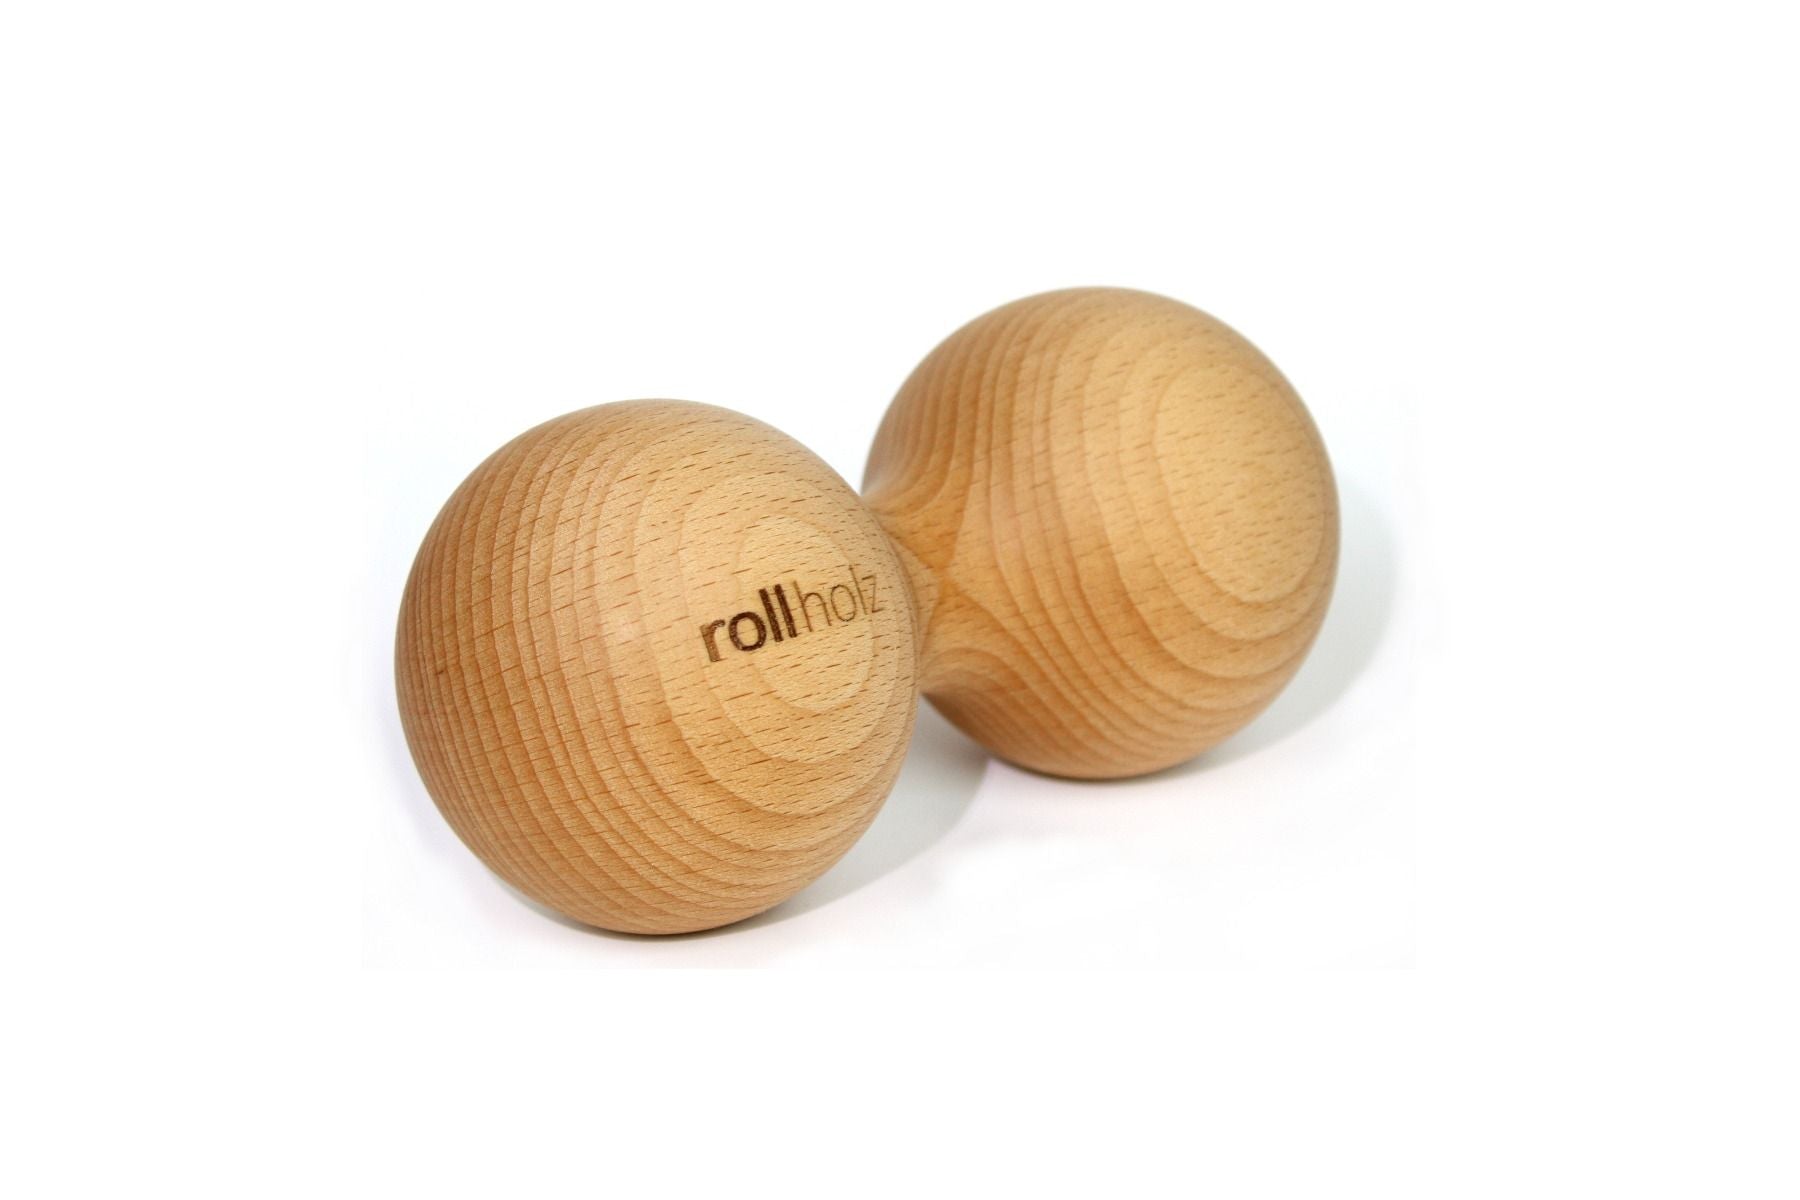 RollHolz DoubleBall Trigger Point Massager